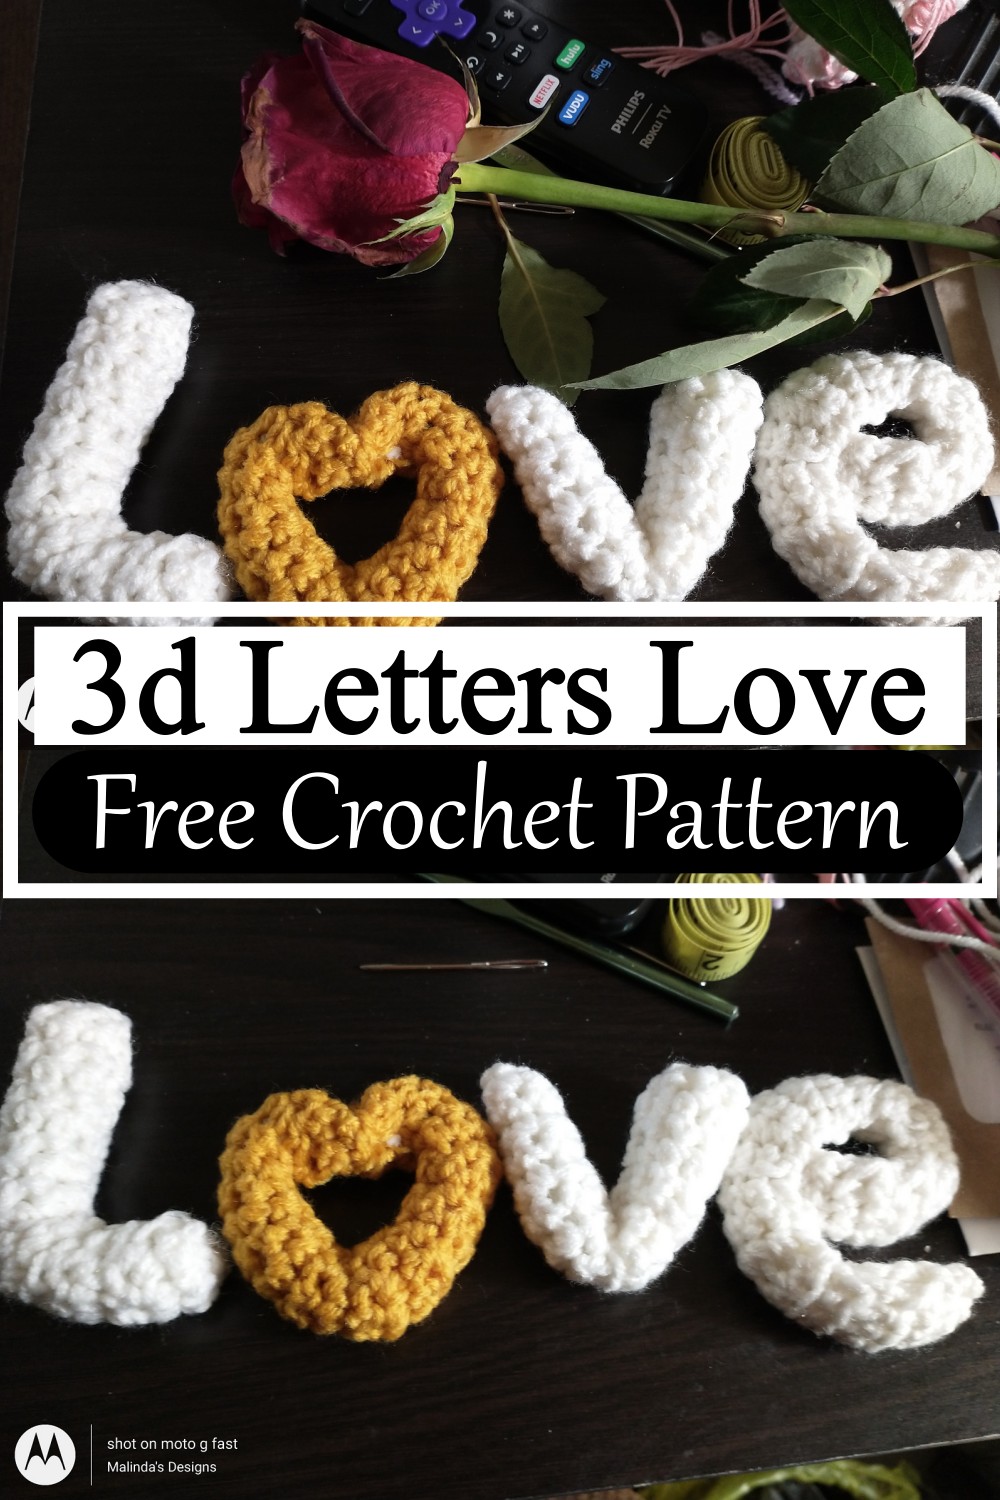 3d Letters Love